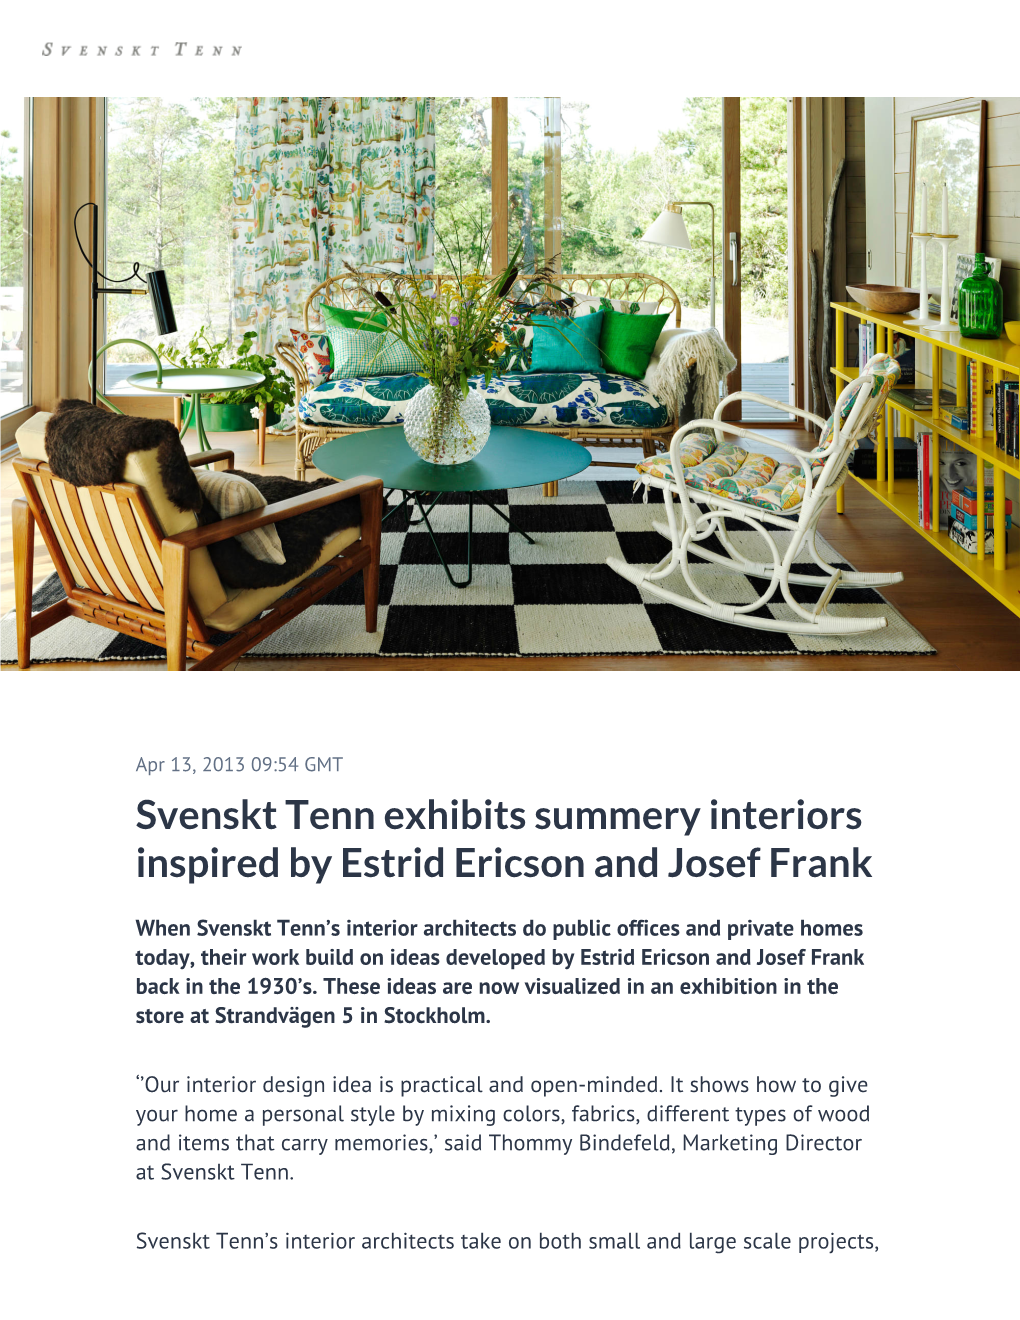 Svenskt Tenn Exhibits Summery Interiors Inspired by Estrid Ericson and Josef Frank